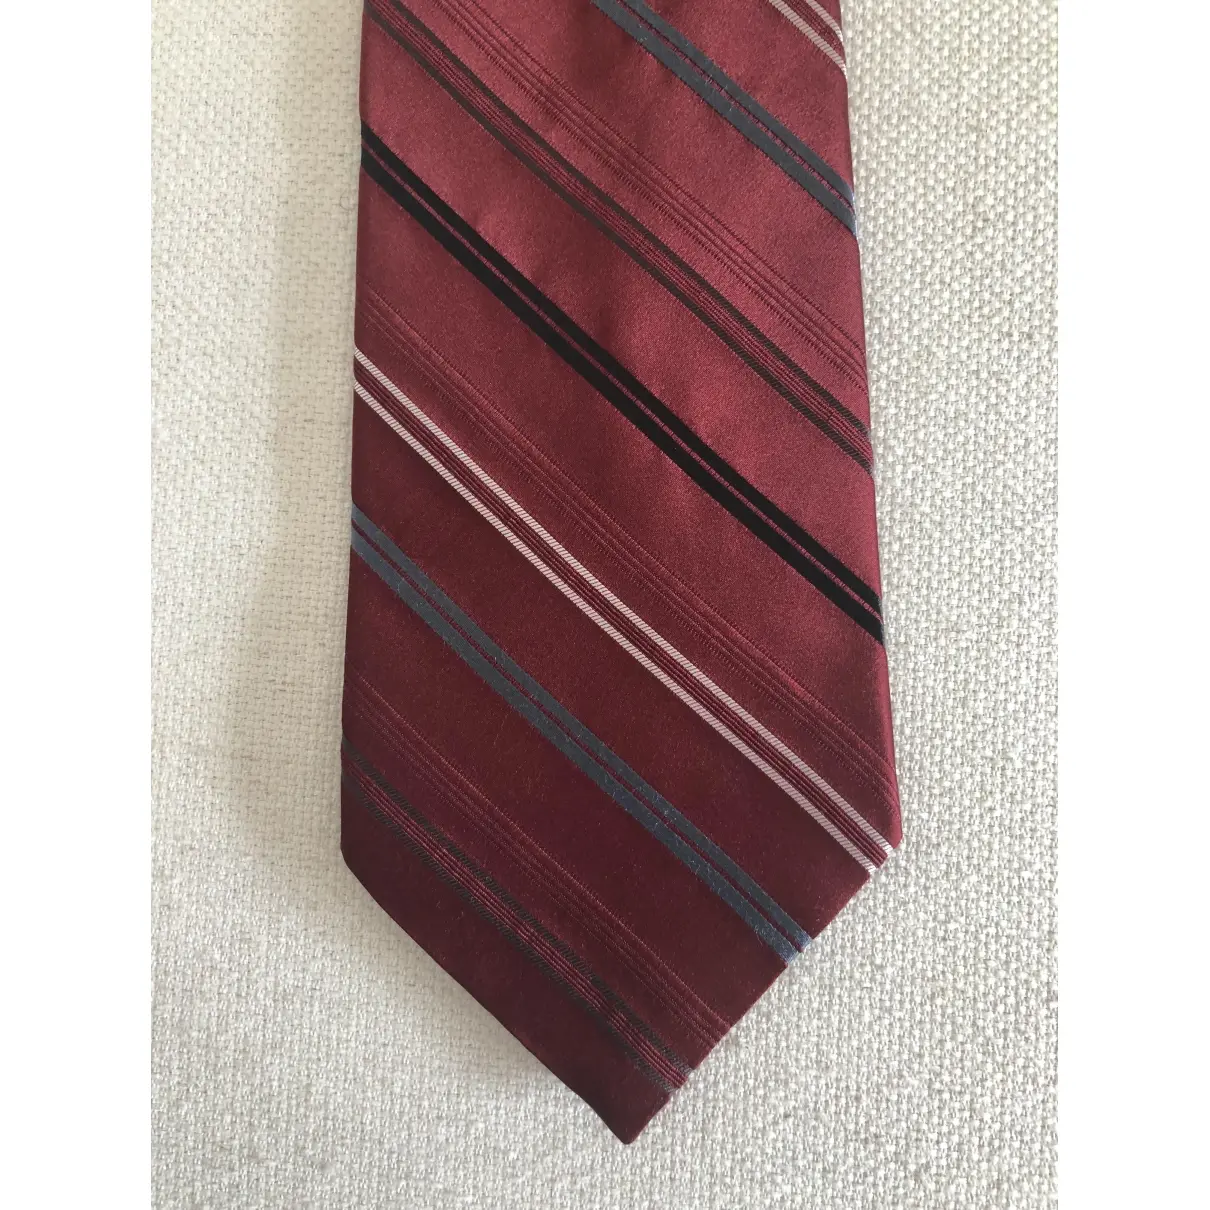 Dkny Silk tie for sale